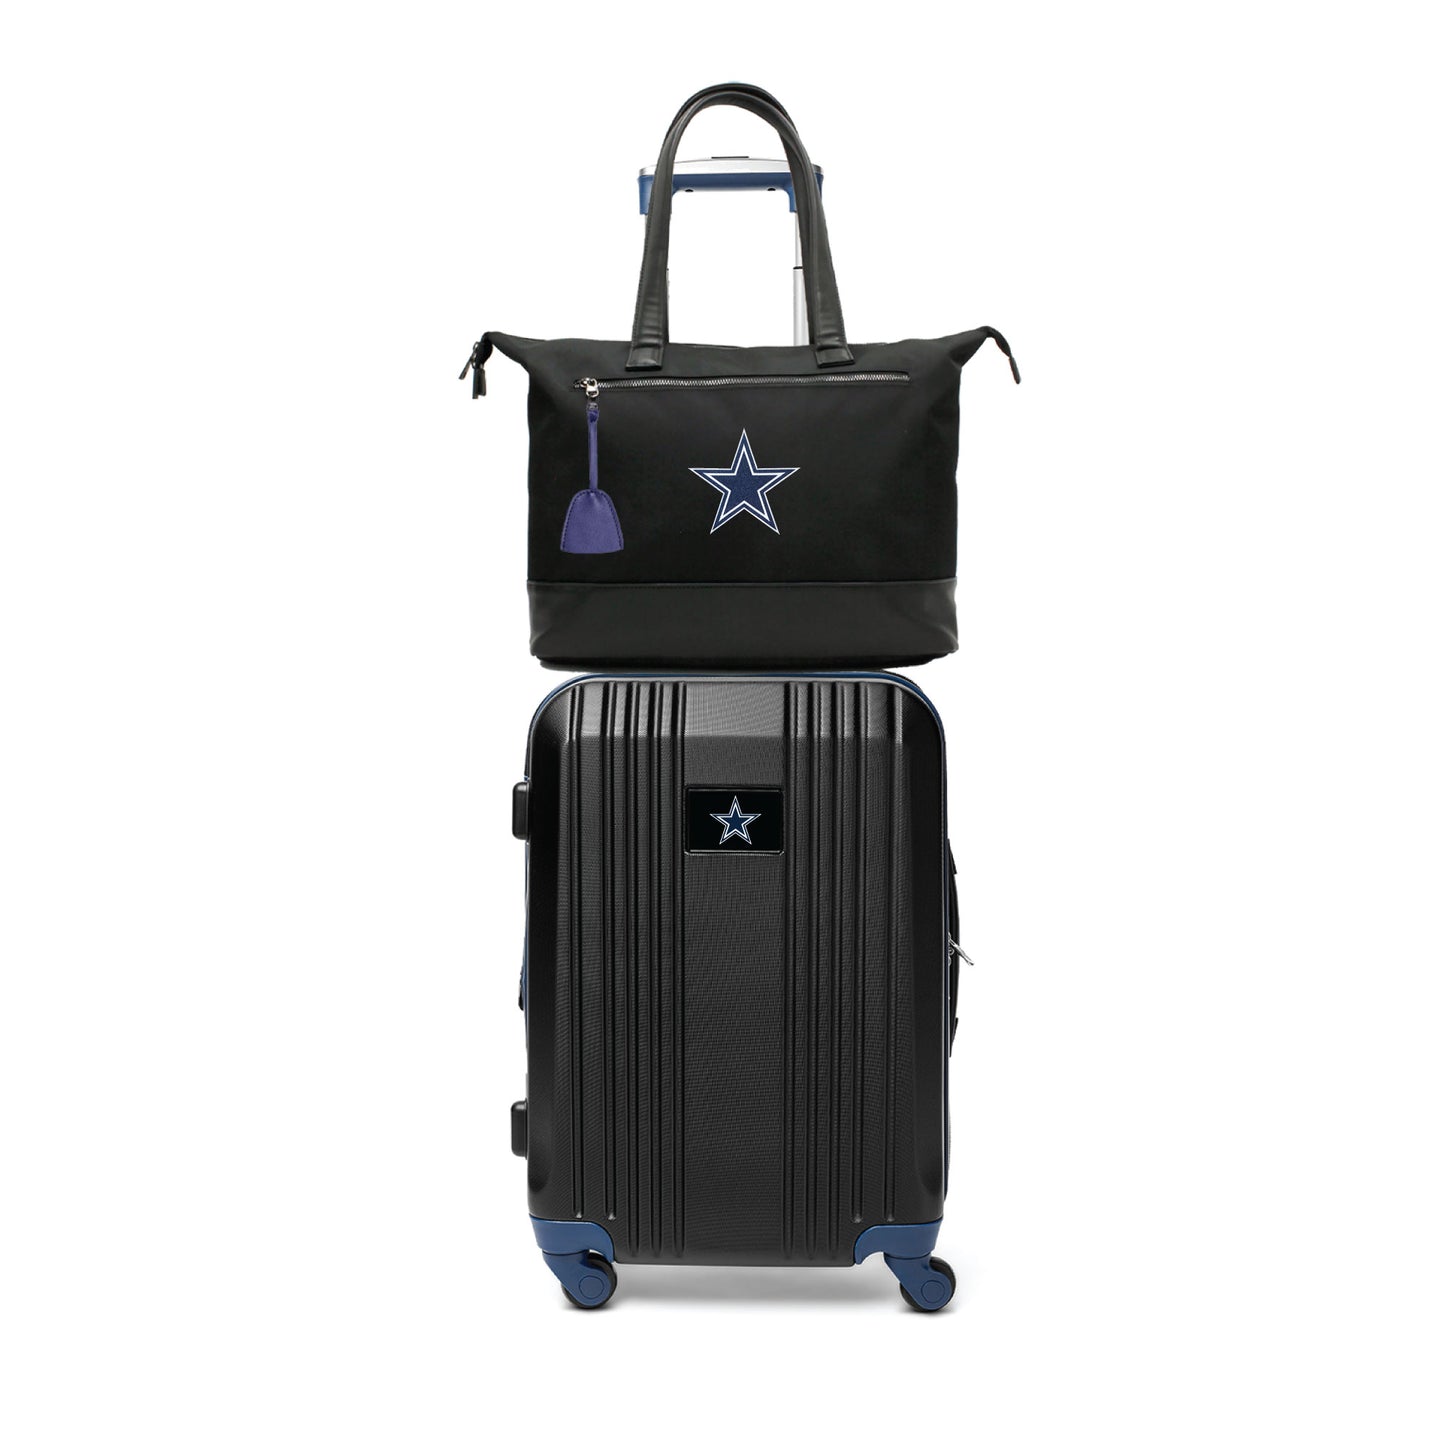 Dallas Cowboys Premium Laptop Tote Bag and Luggage Set